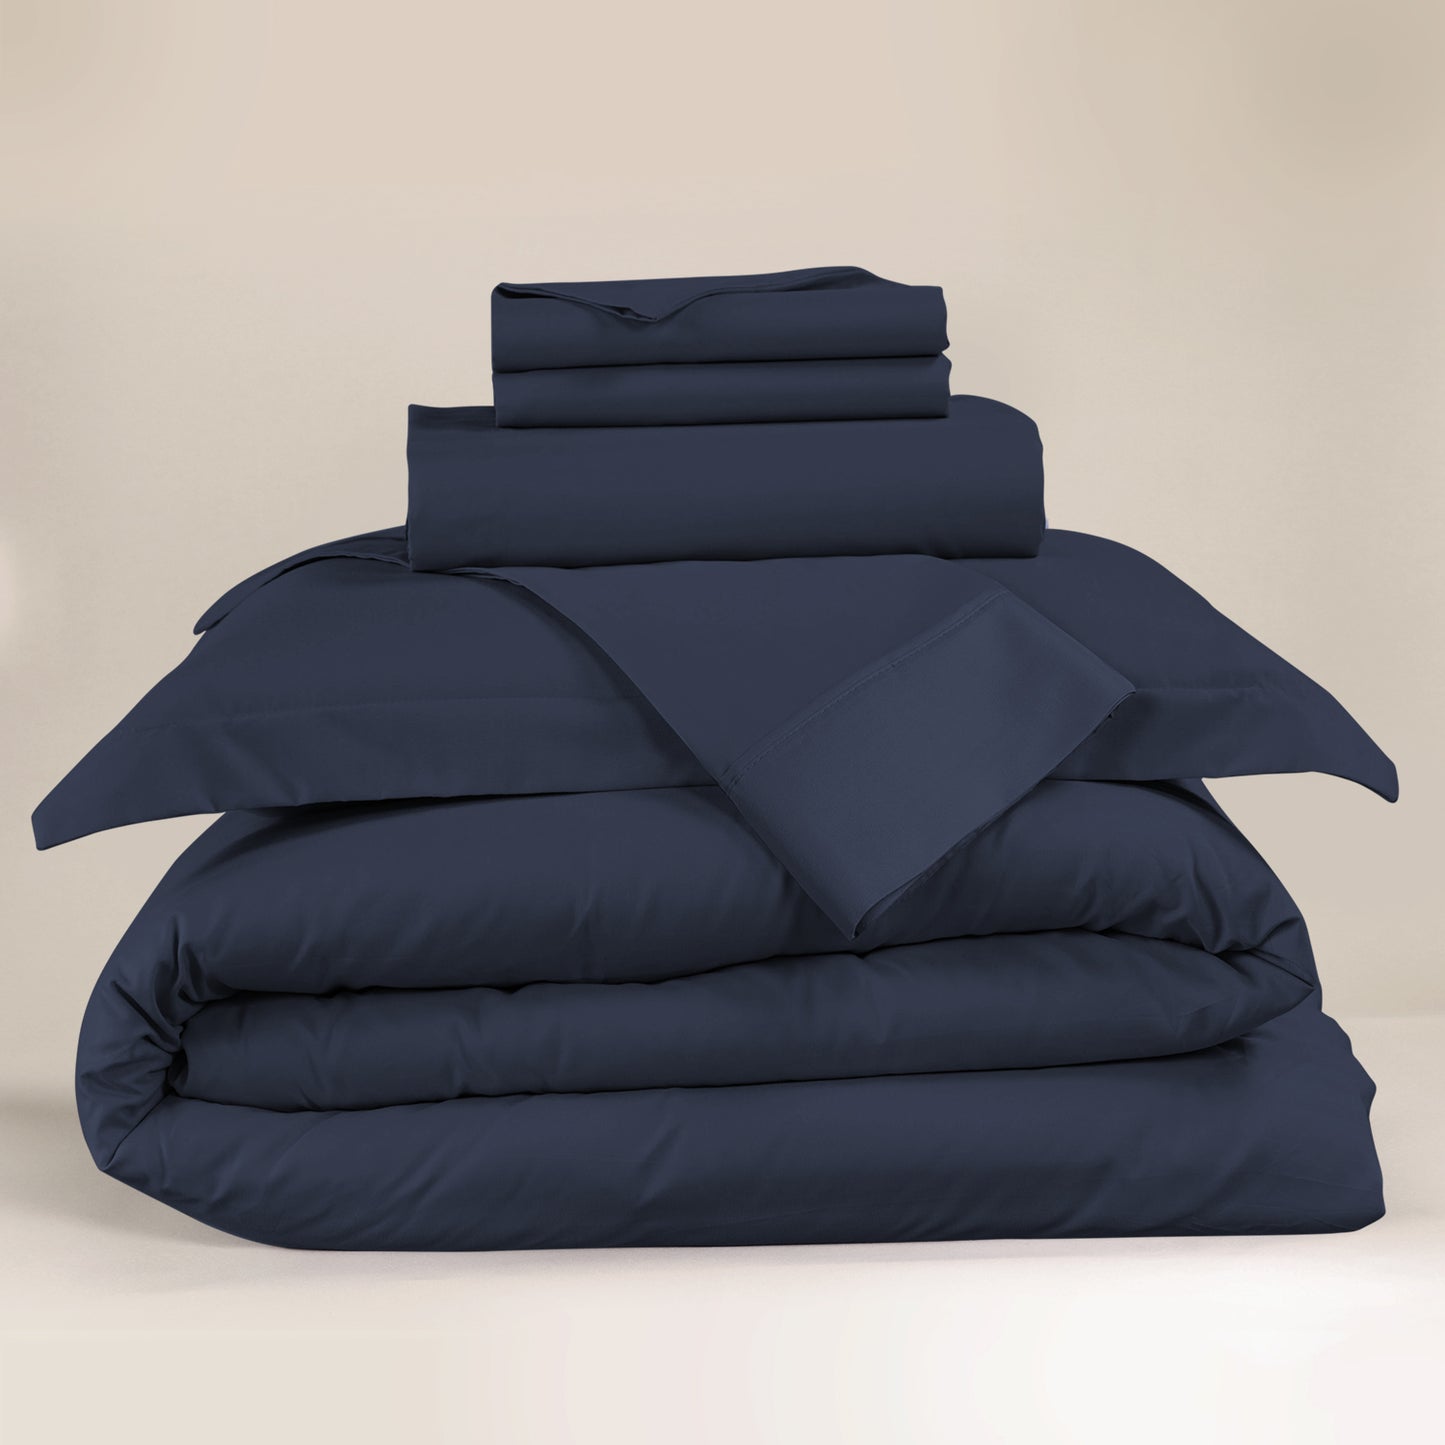 Nestl Bedding Duvet Cover 6-Piece Set - 1000 Thread Count Sheets - Tri Blend Cotton Duvet Cover with Zipper, Deep Pocket Fitted Sheet, 2 Cooling Pillow Cases, 2 Pillow Shams